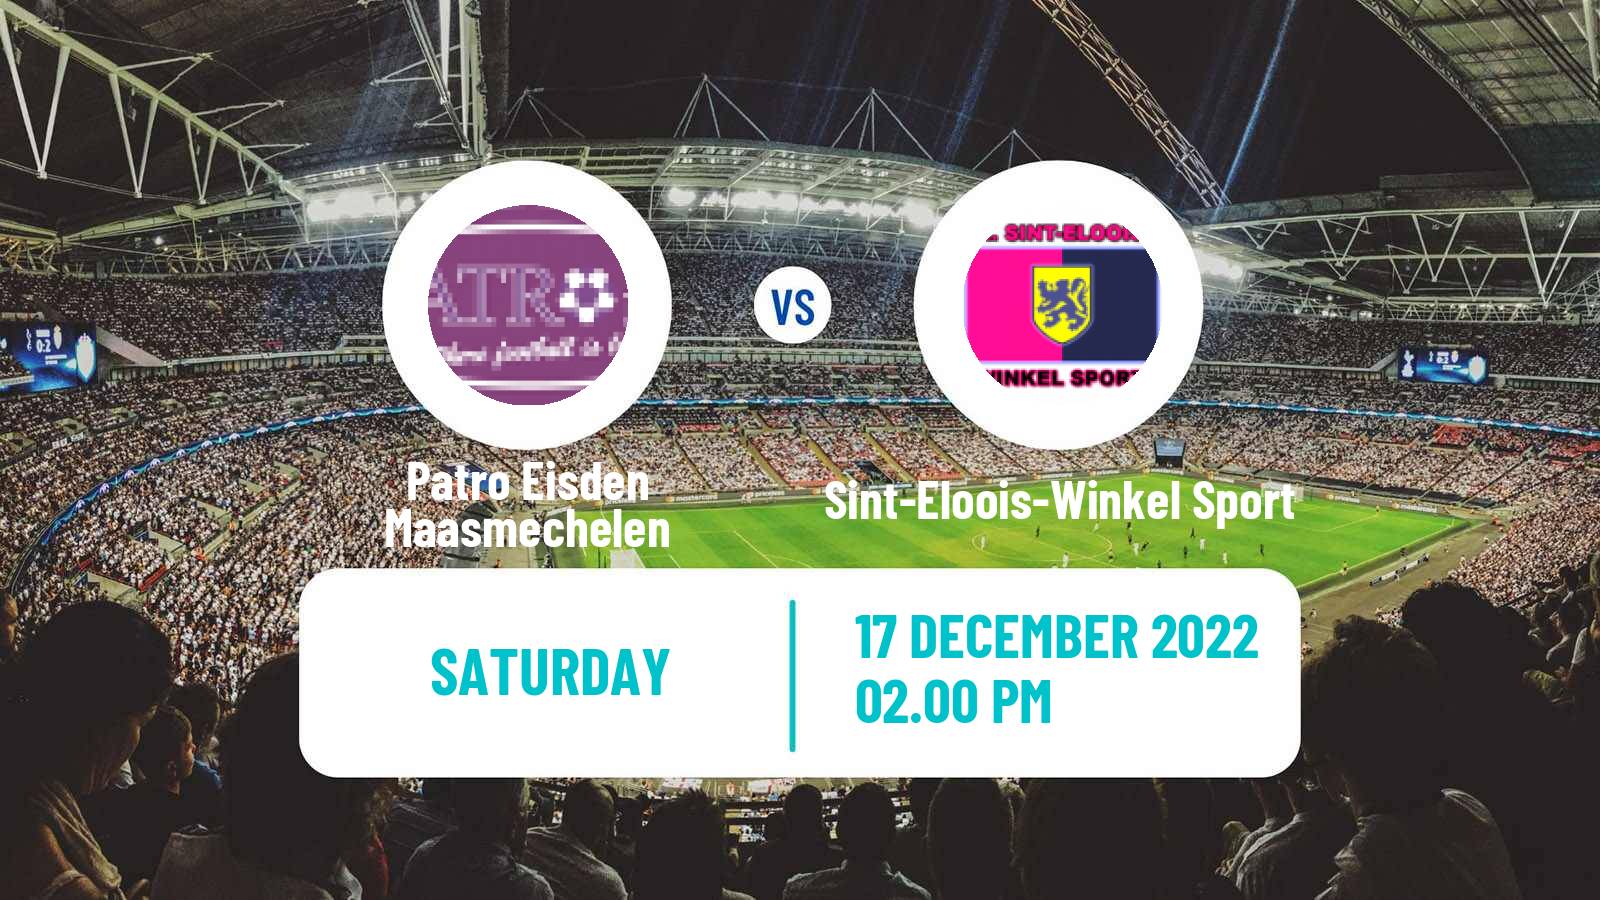 Soccer Belgian National Division 1 Patro Eisden Maasmechelen - Sint-Eloois-Winkel Sport